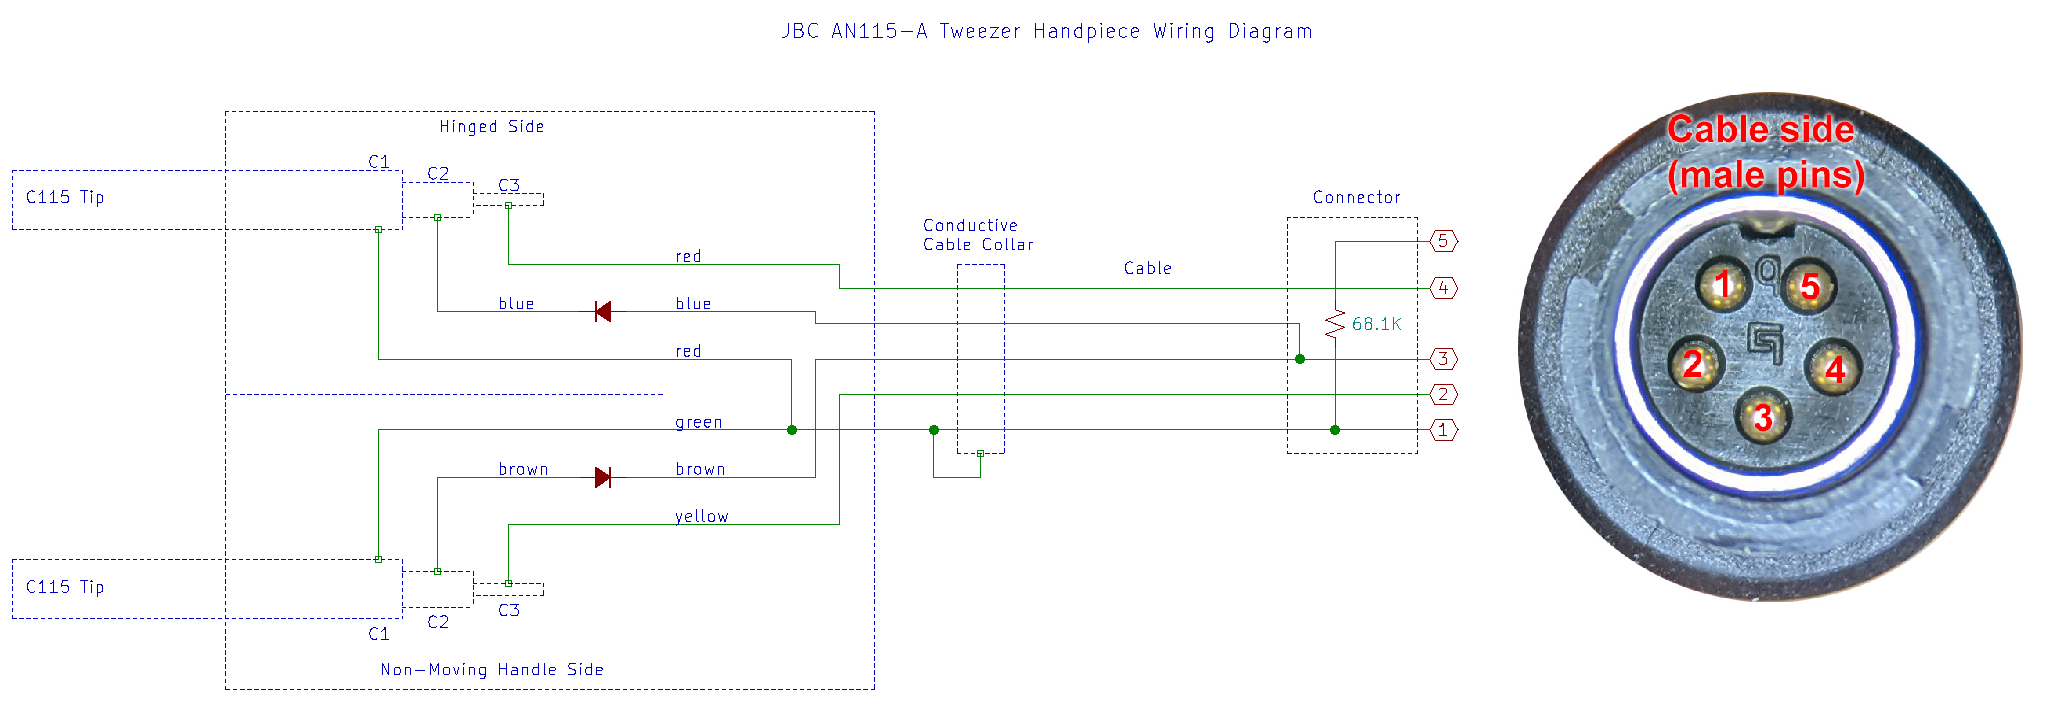 JBC AN115-A Tweezers Wiring Diagram.png